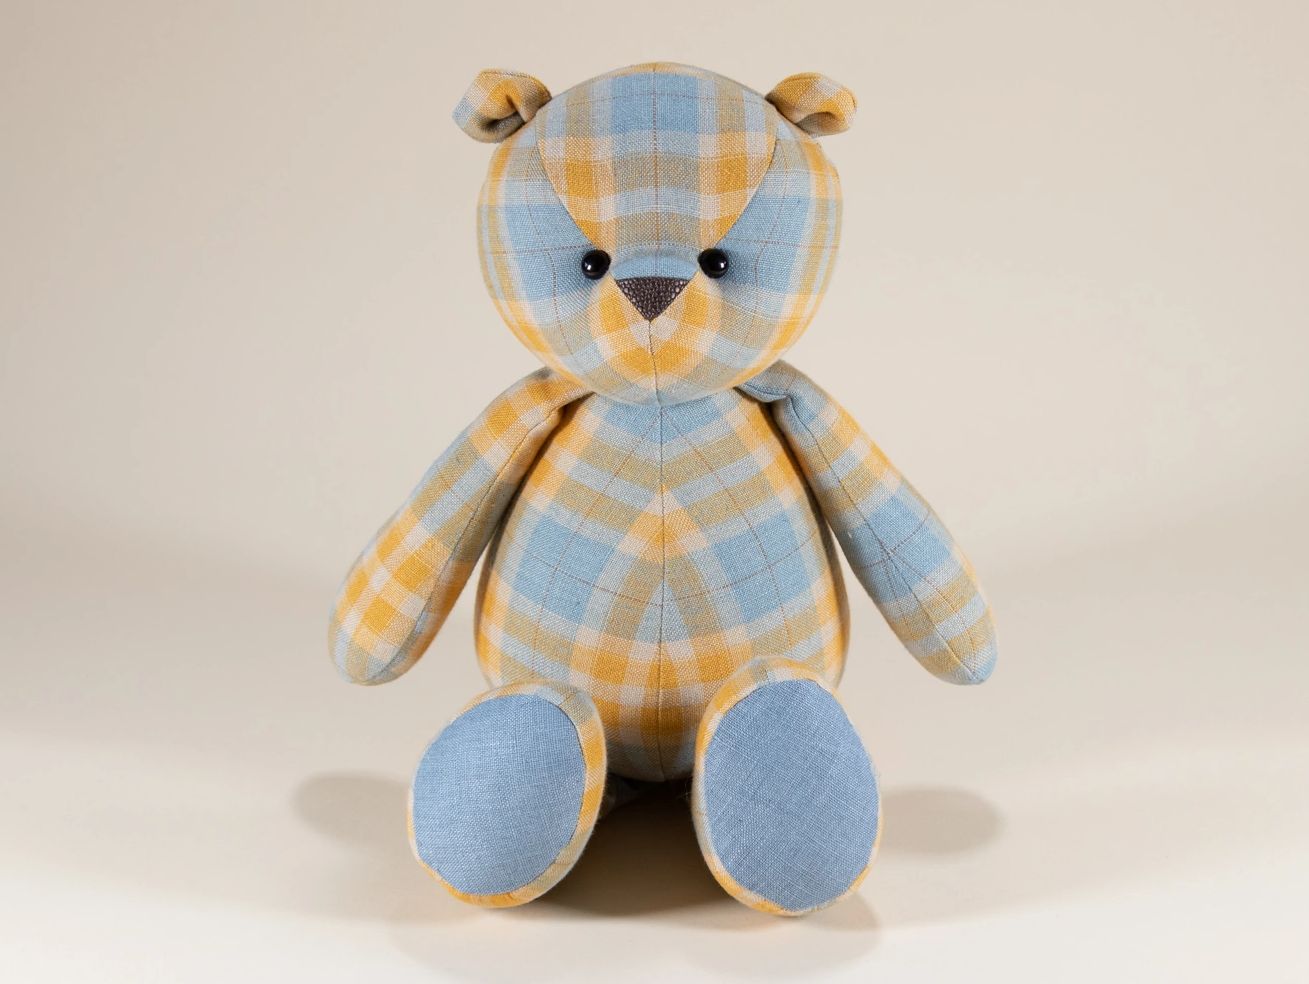 Checkered yellow &n blue teddy bear